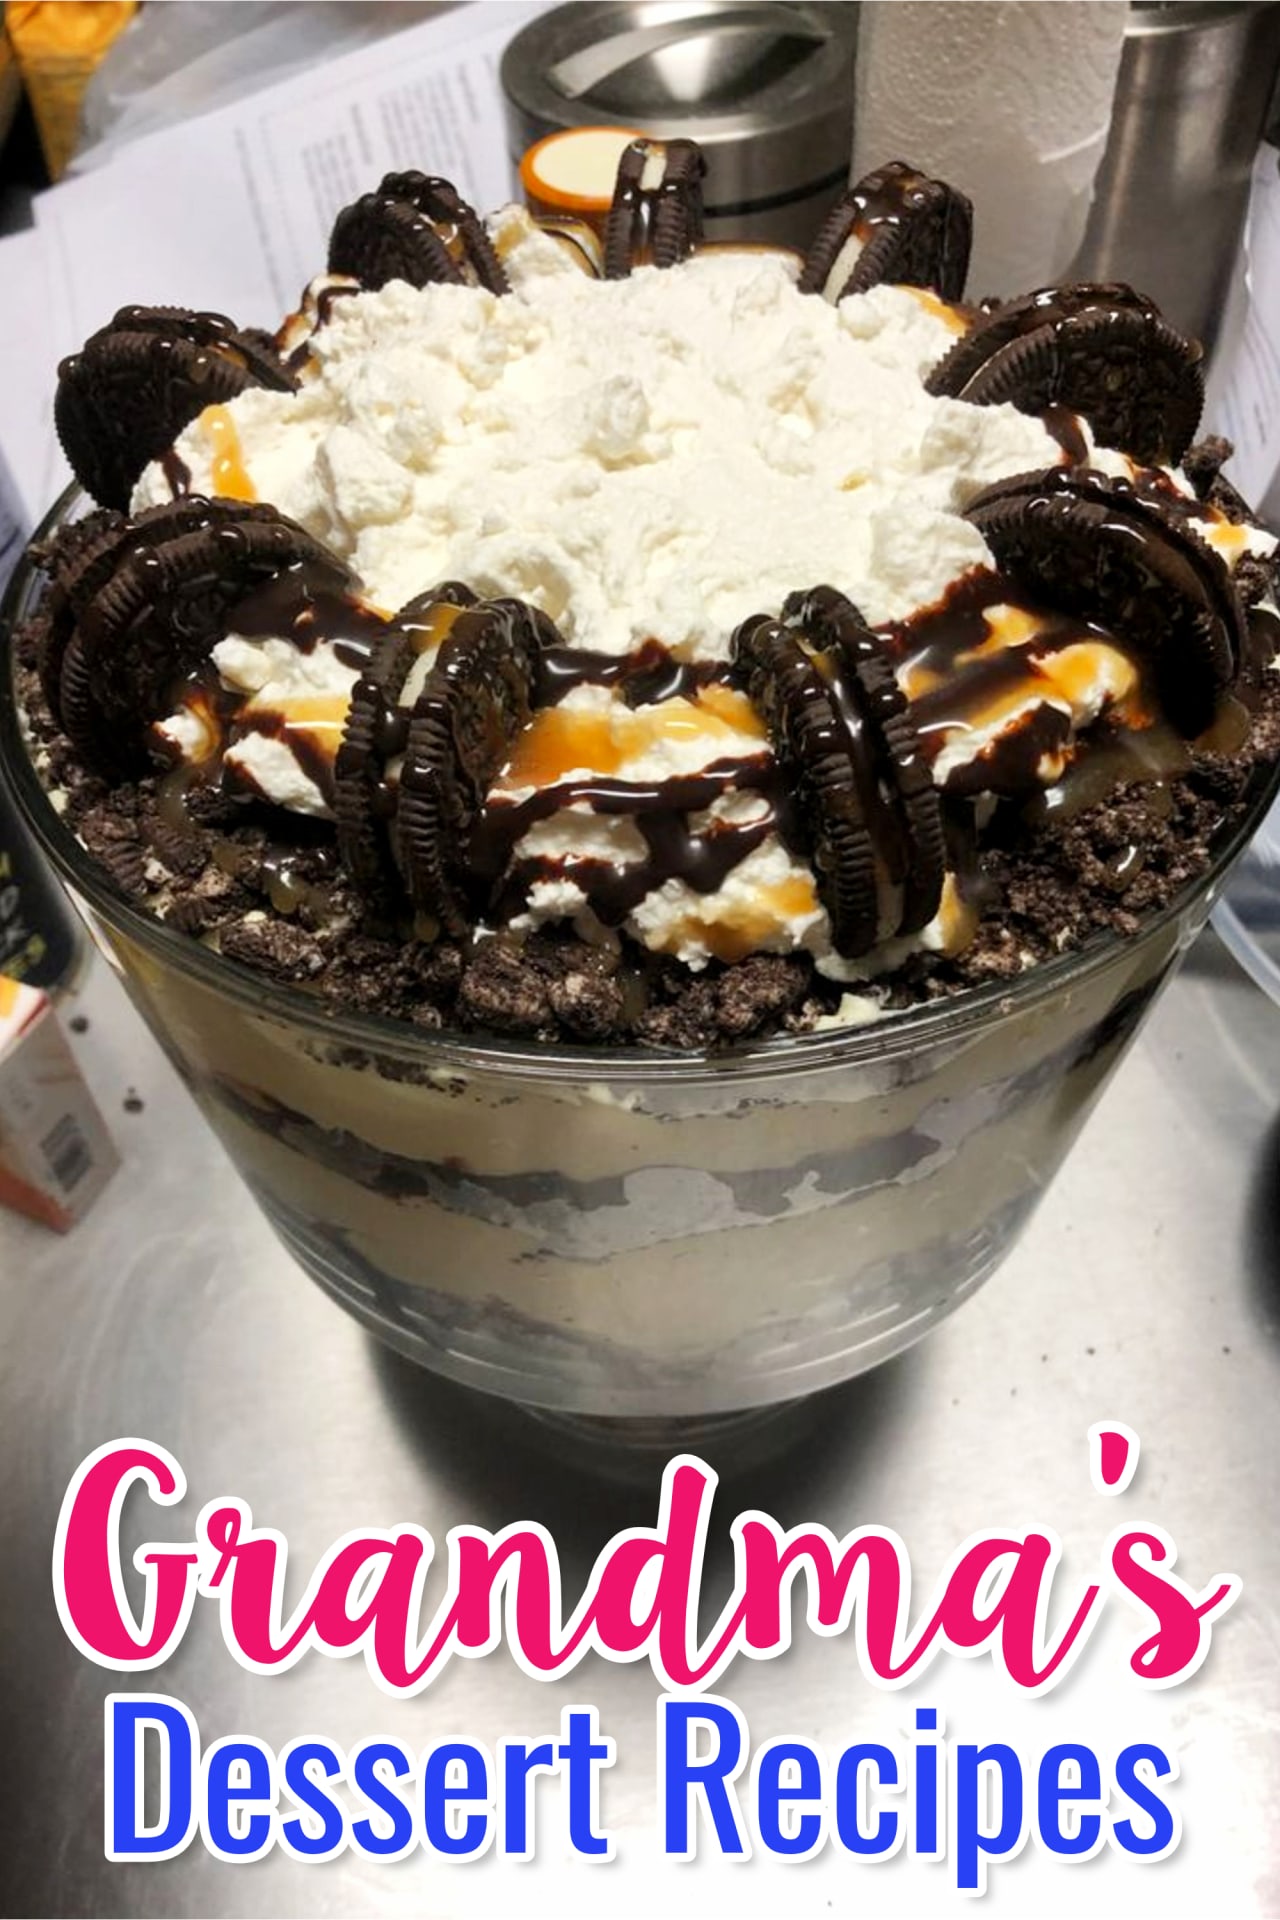 Grandma's Desserts - Church Desserts: Homemade Potluck and Family Reunion Dessert Ideas That Will Even Please Your Church Crowd